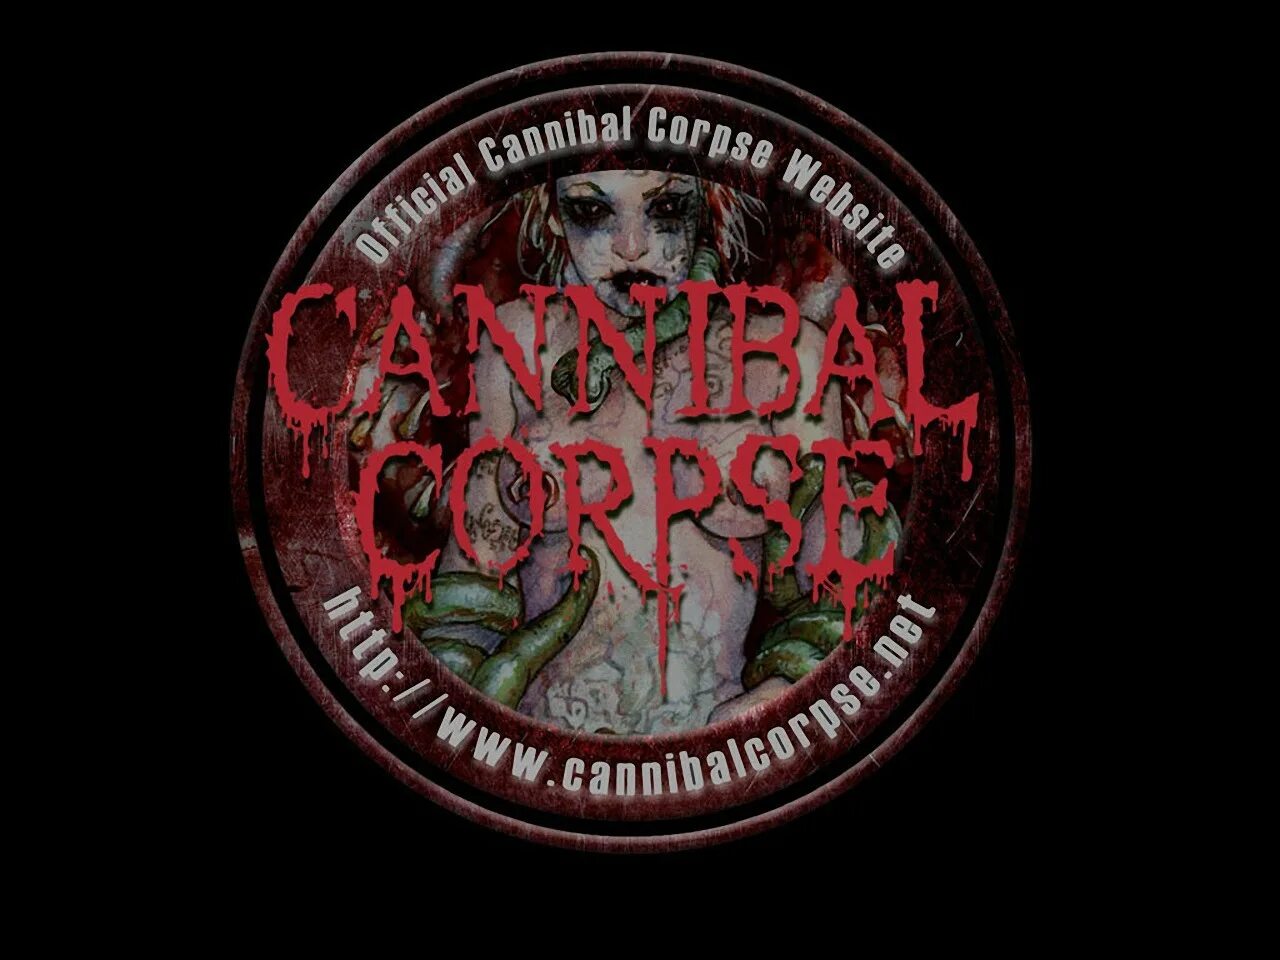 Cannibal corpse песни. Группа Cannibal Corpse альбомы обложки. Cannibal Corpse обложки альбомов.